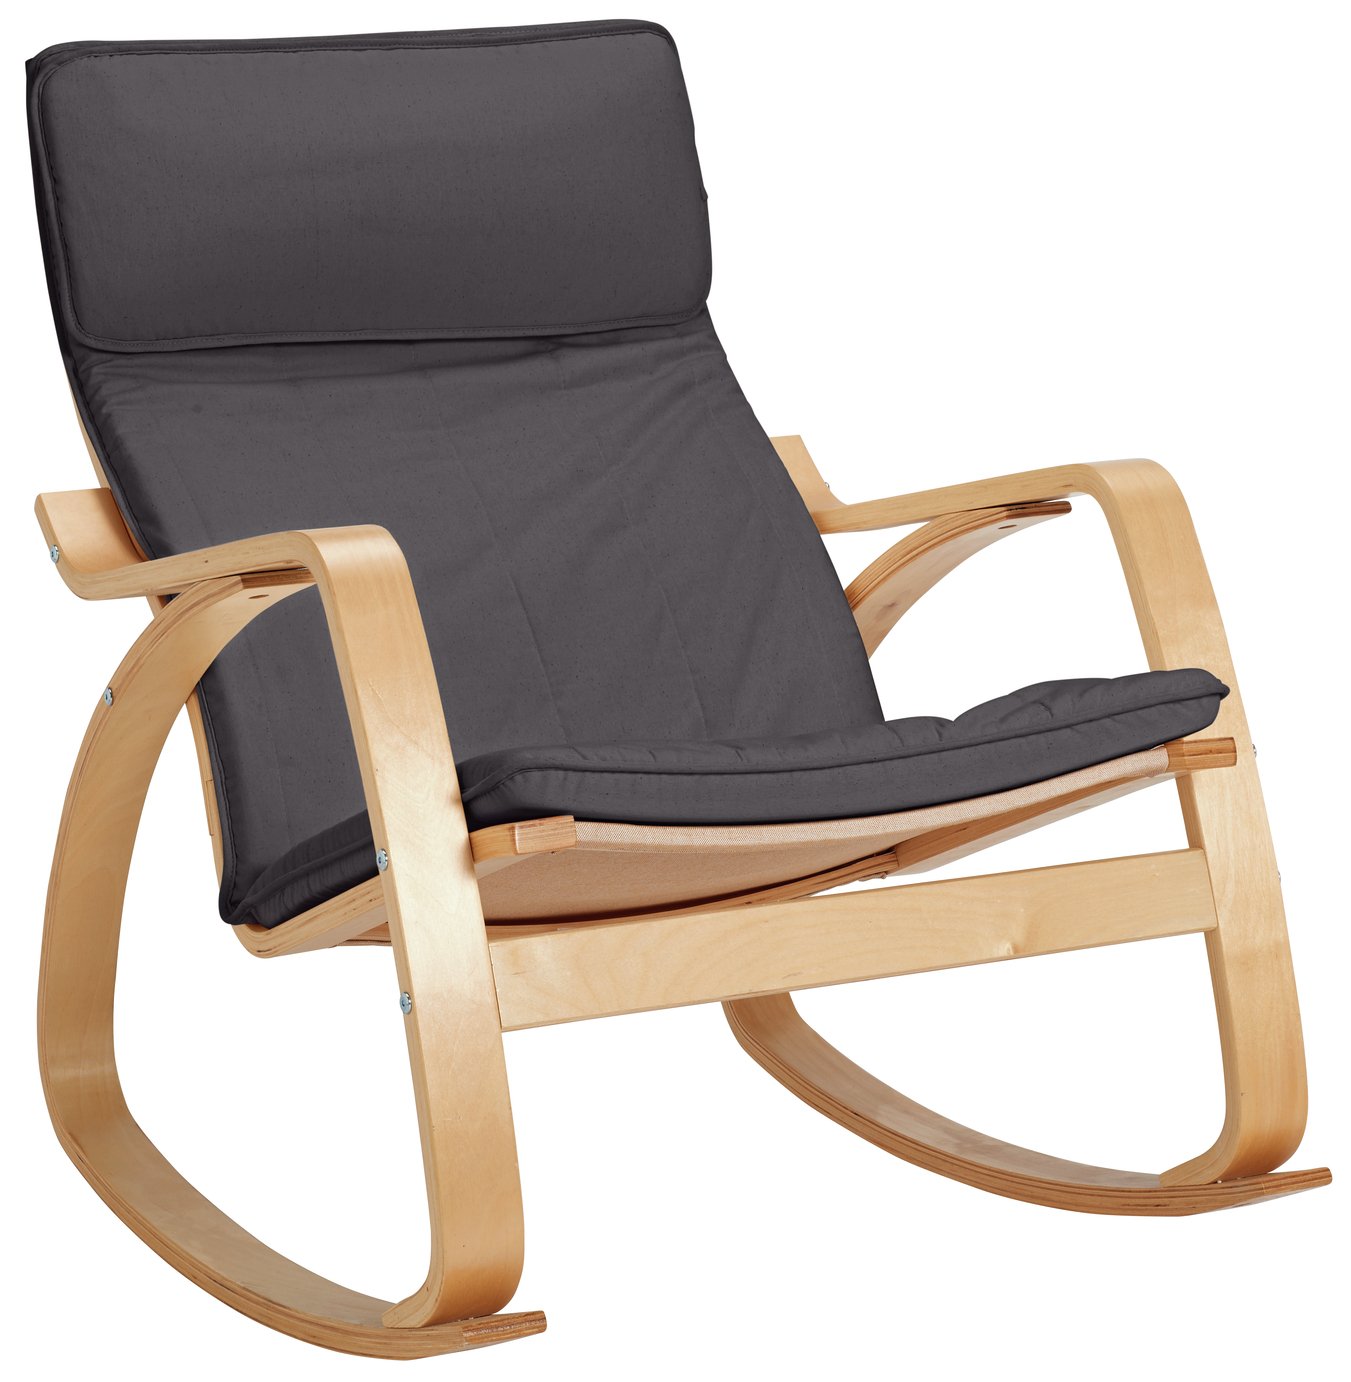 Argos Home Rocking Chair Reviews